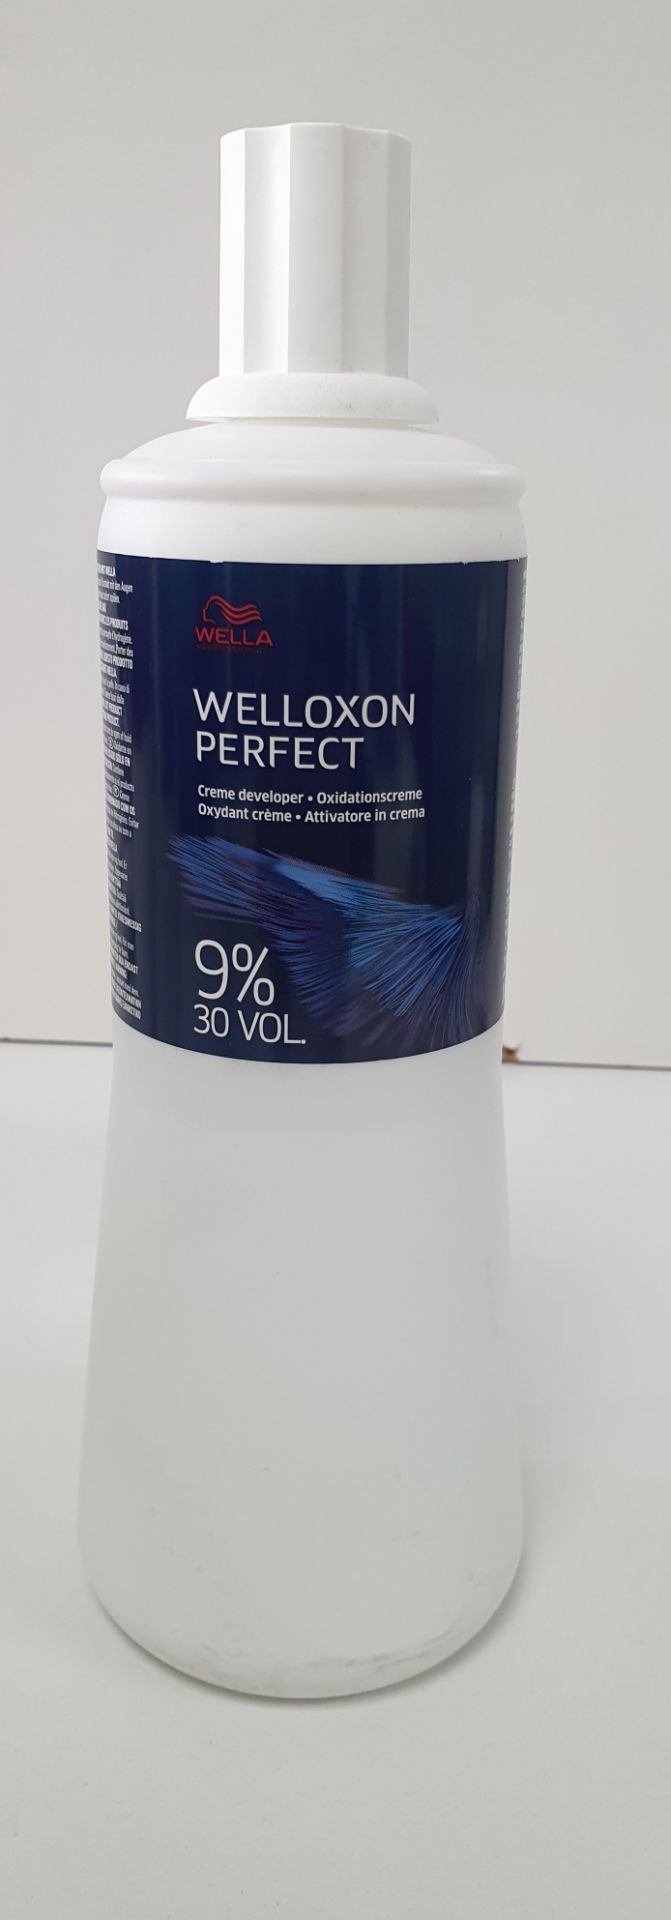 5 x Wella Welloxon Perfect Crème Developer | RRP £ 74.75 - Image 3 of 4